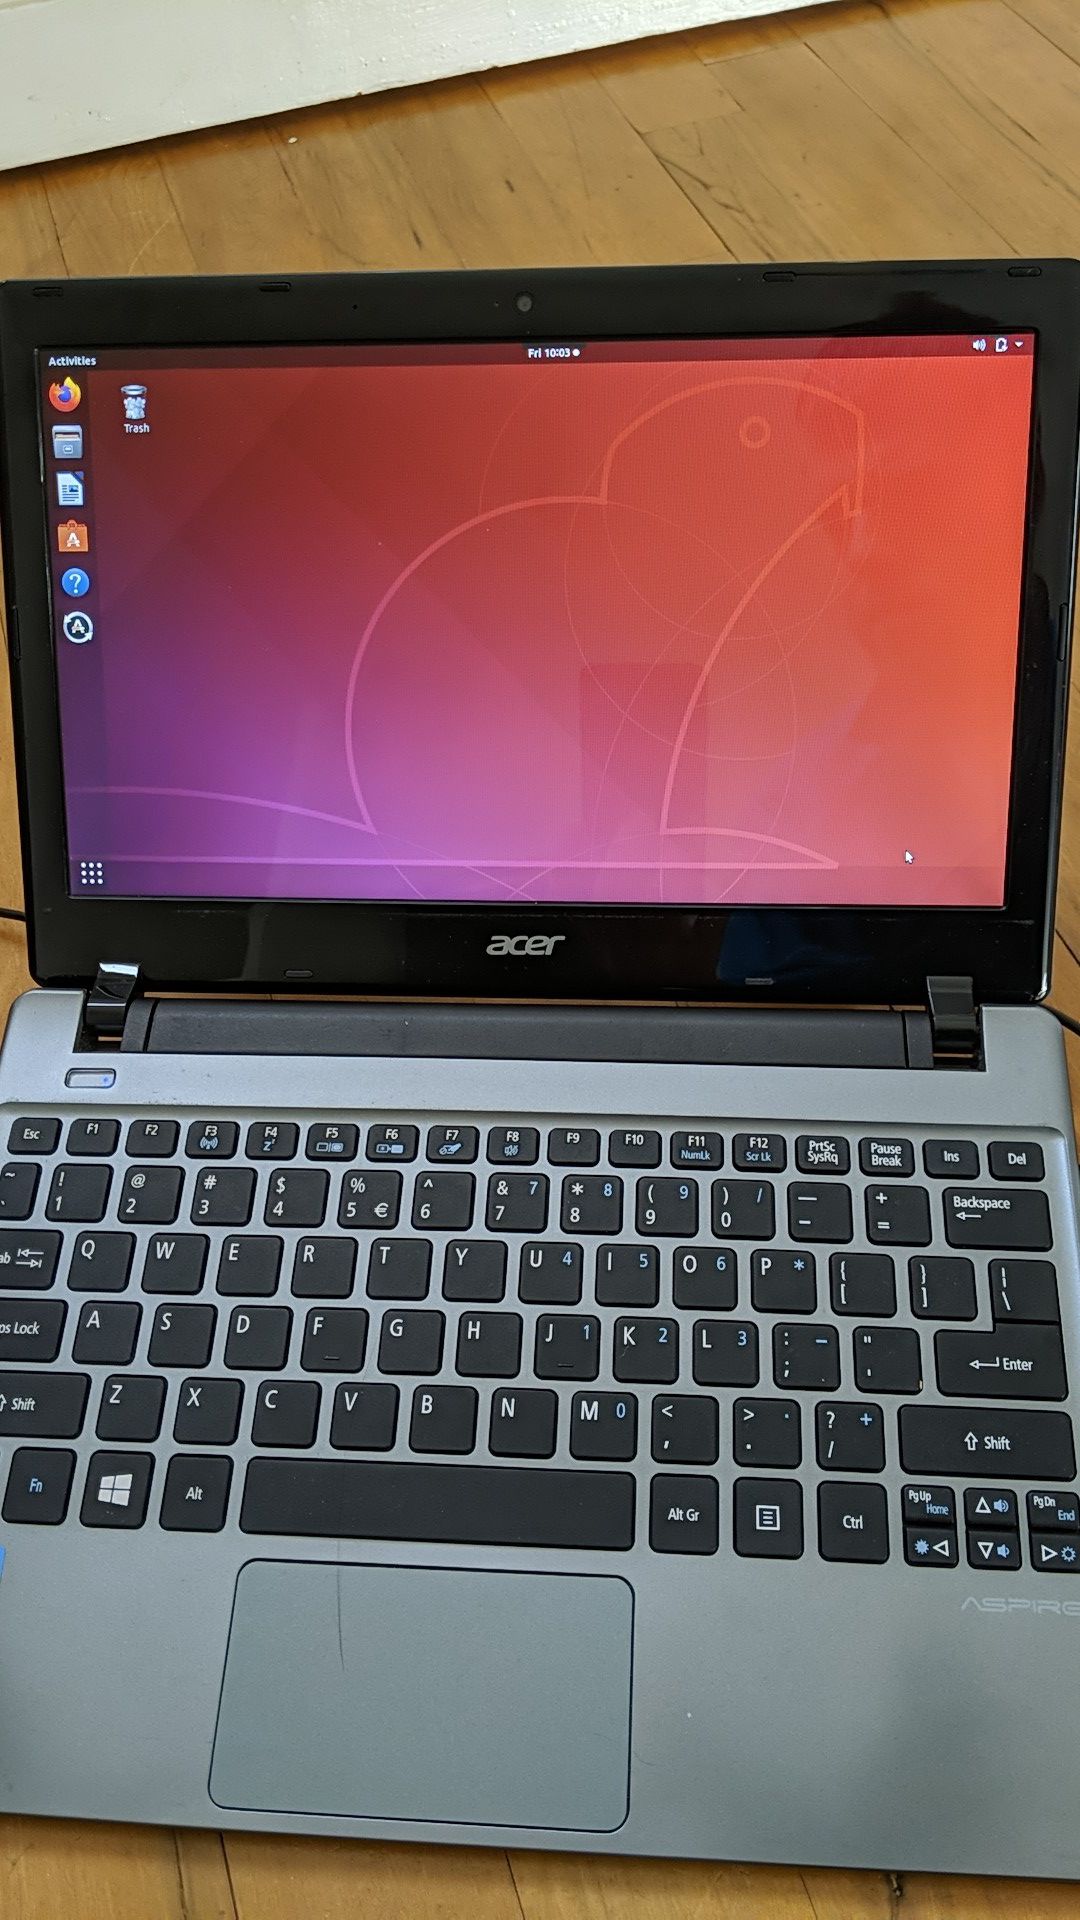 Acer Aspire V5 11.6" laptop. Intel i5, 8GB RAM, 120GB SSD